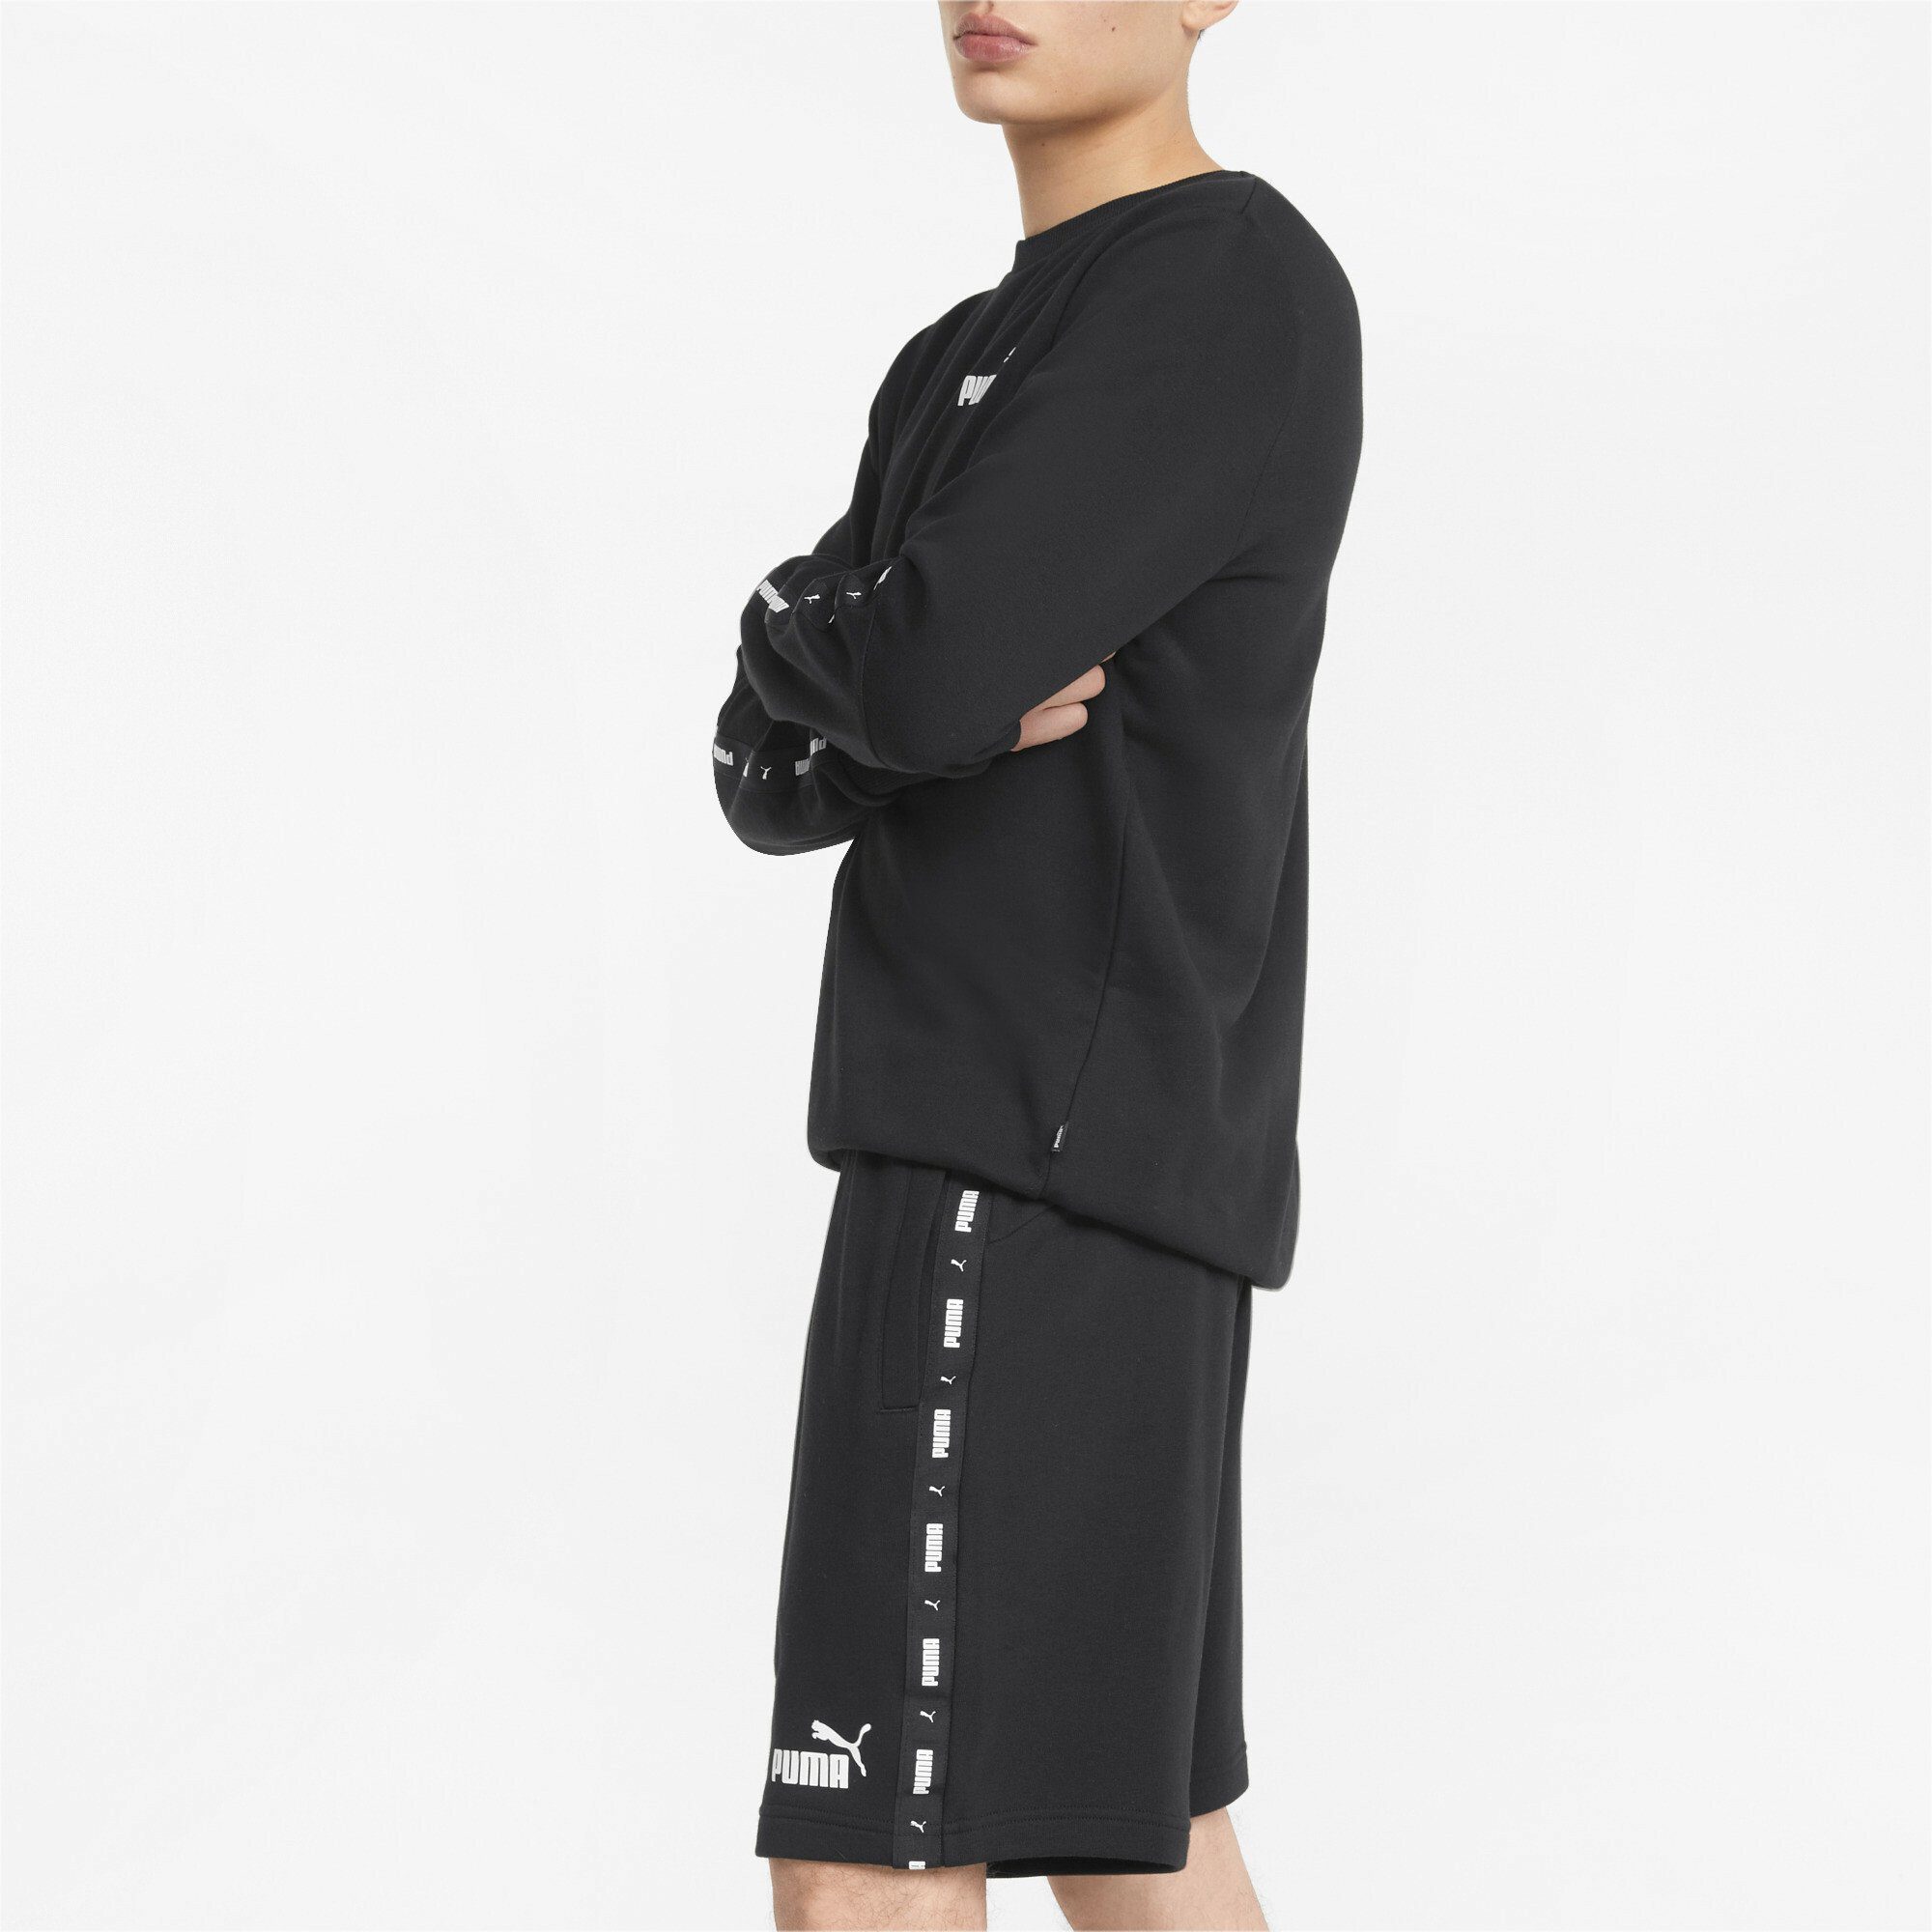 PUMA Sporthose Essentials+ Black Shorts Herren